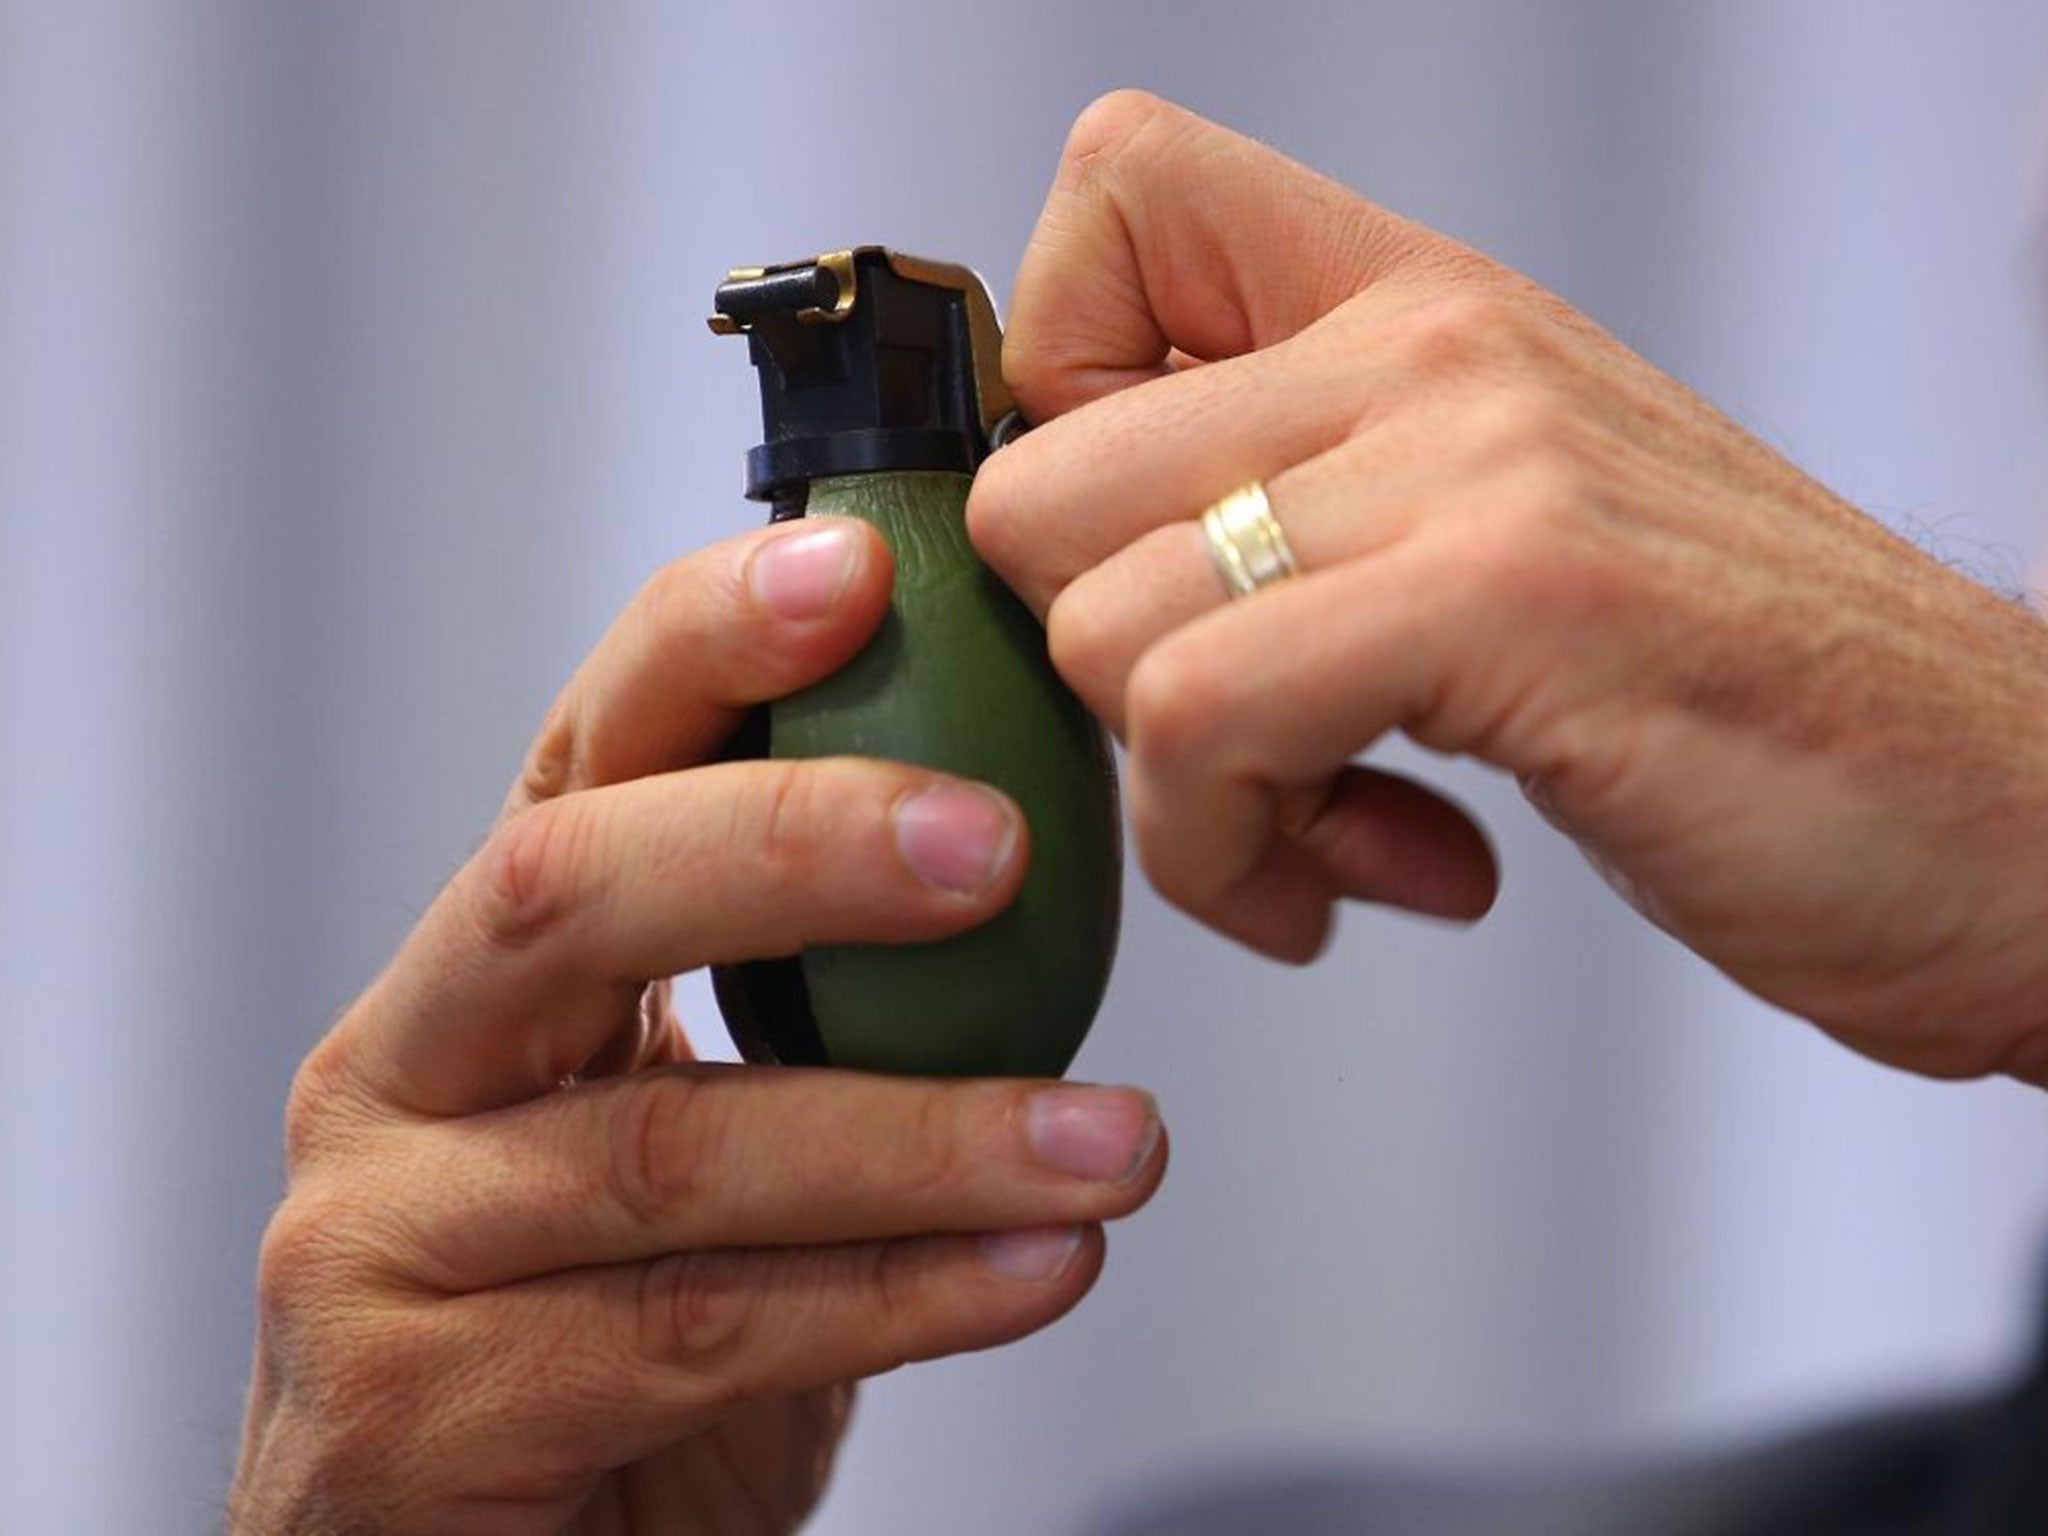 Andreas Stenger, of State Office of Criminal Investigation shows a model hand grenade after an attack on a refugee shelter January 29, 2016 in Villingen-Schwenningen, Germany.